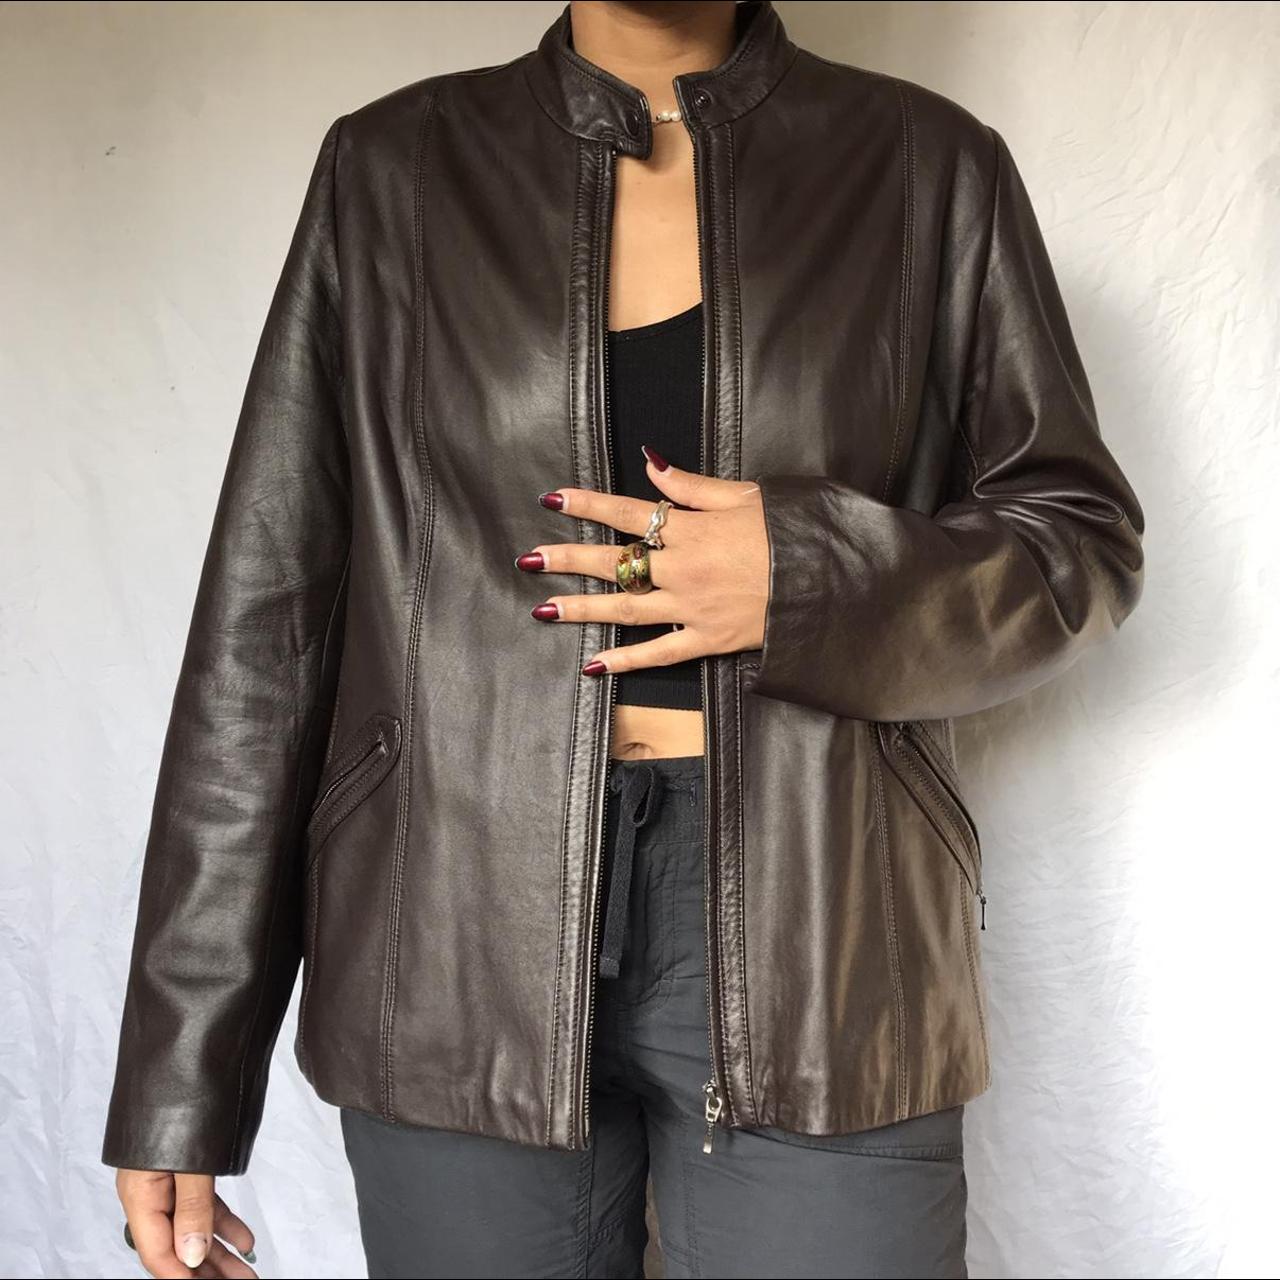 Dark brown leather jacket / real leather coat /... - Depop